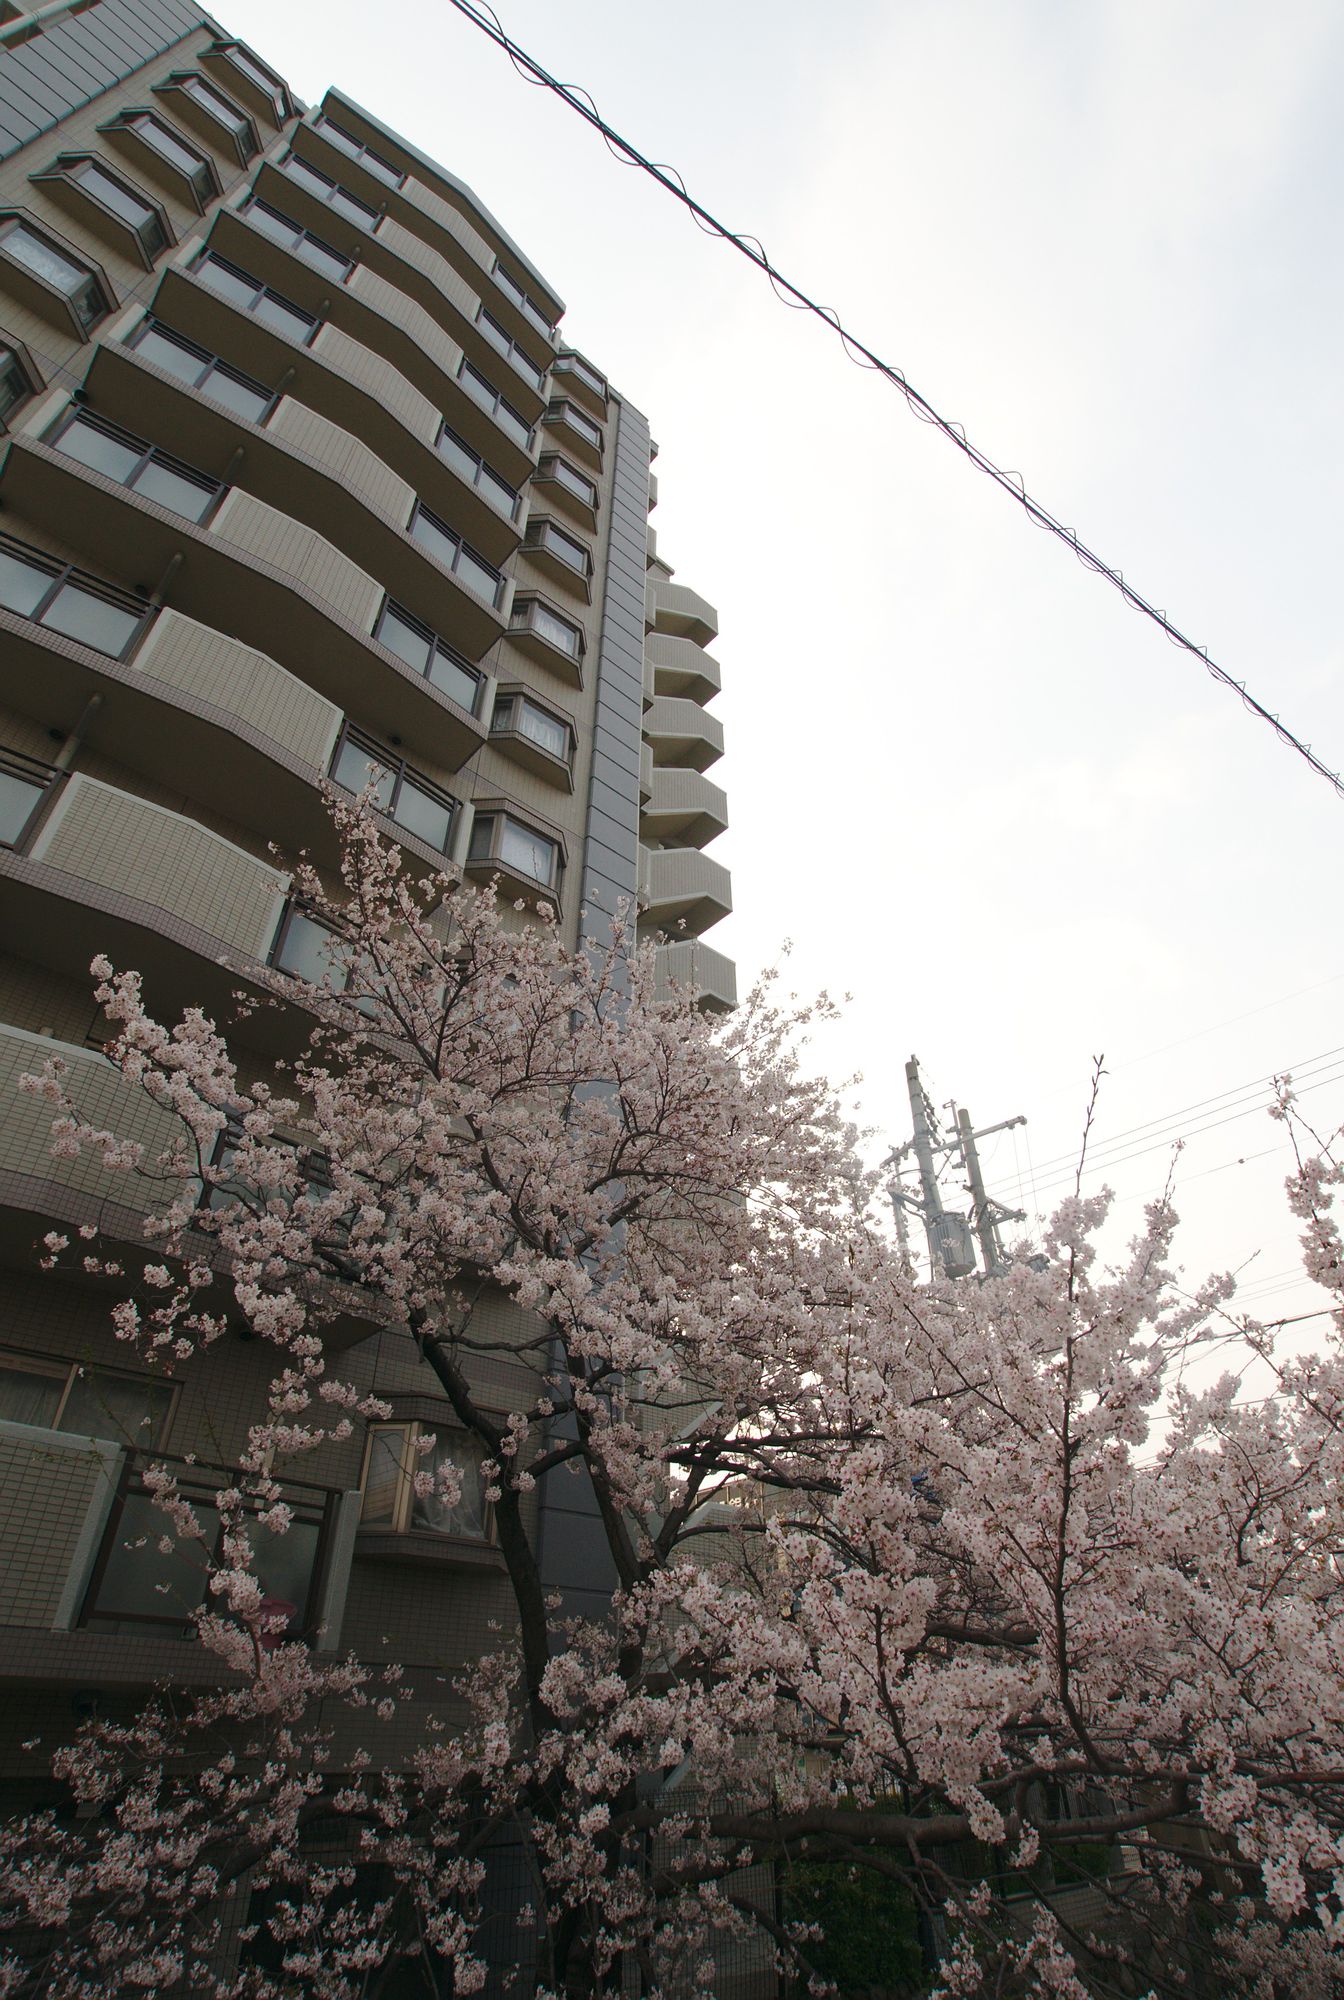 Kyoto Apartment Block with Sakura